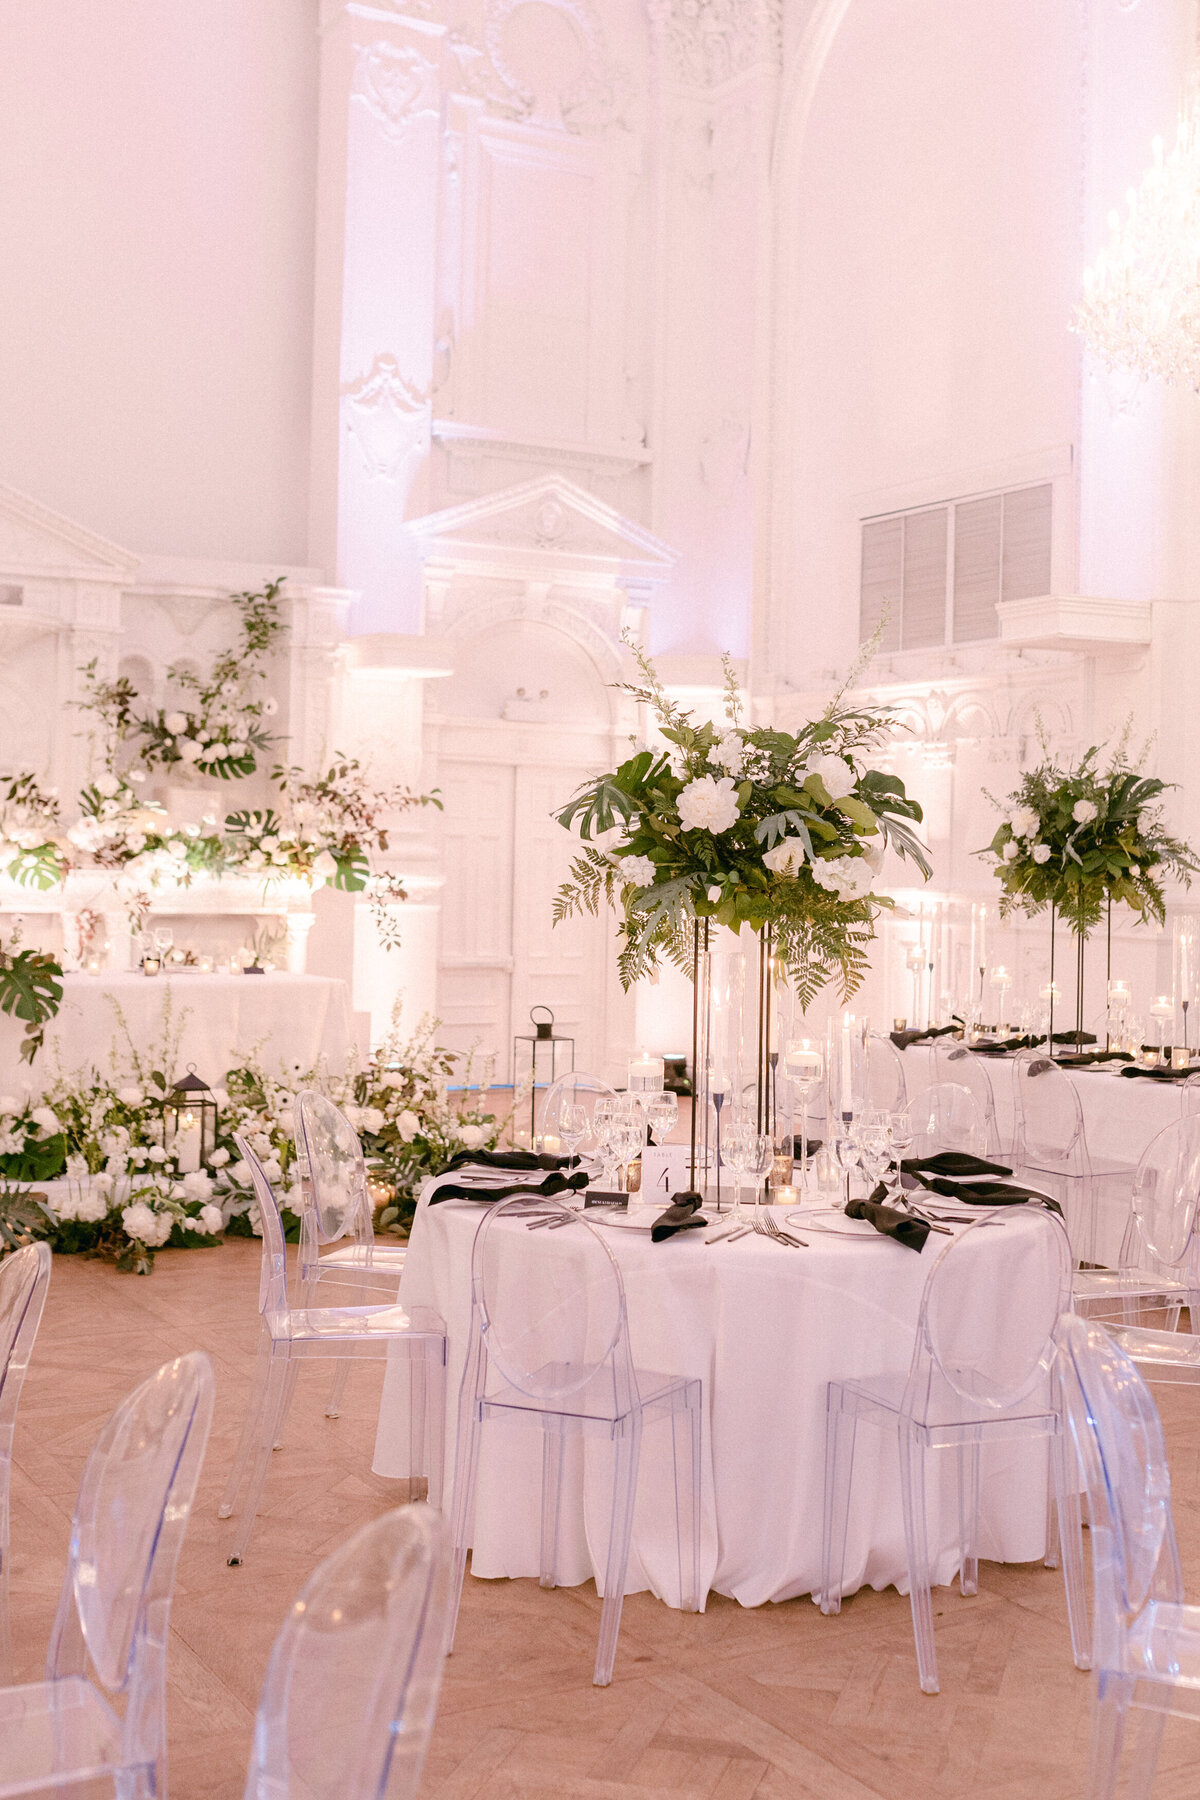 Atelier-Carmel-Wedding-Florist-GALLERY-Spaces-13